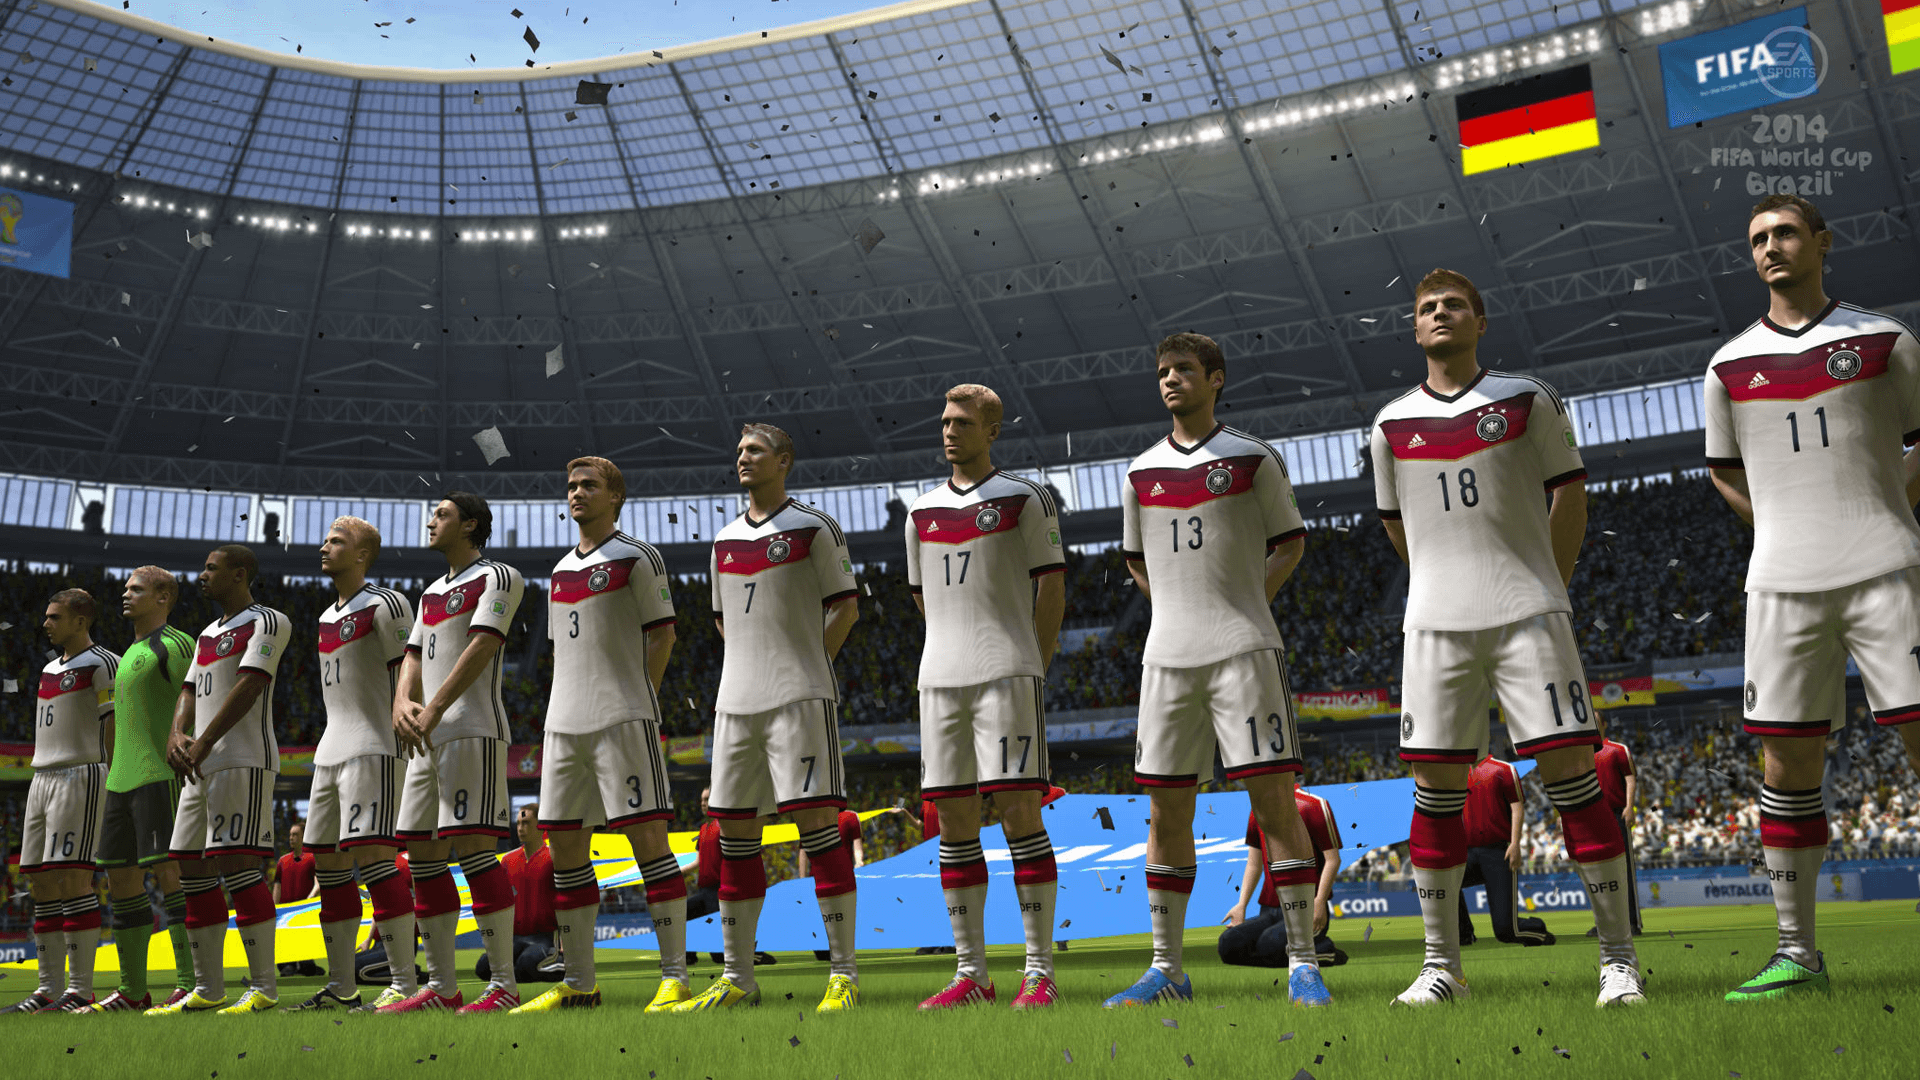 Инсайдер: EA сменит название серии FIFA на Football Club